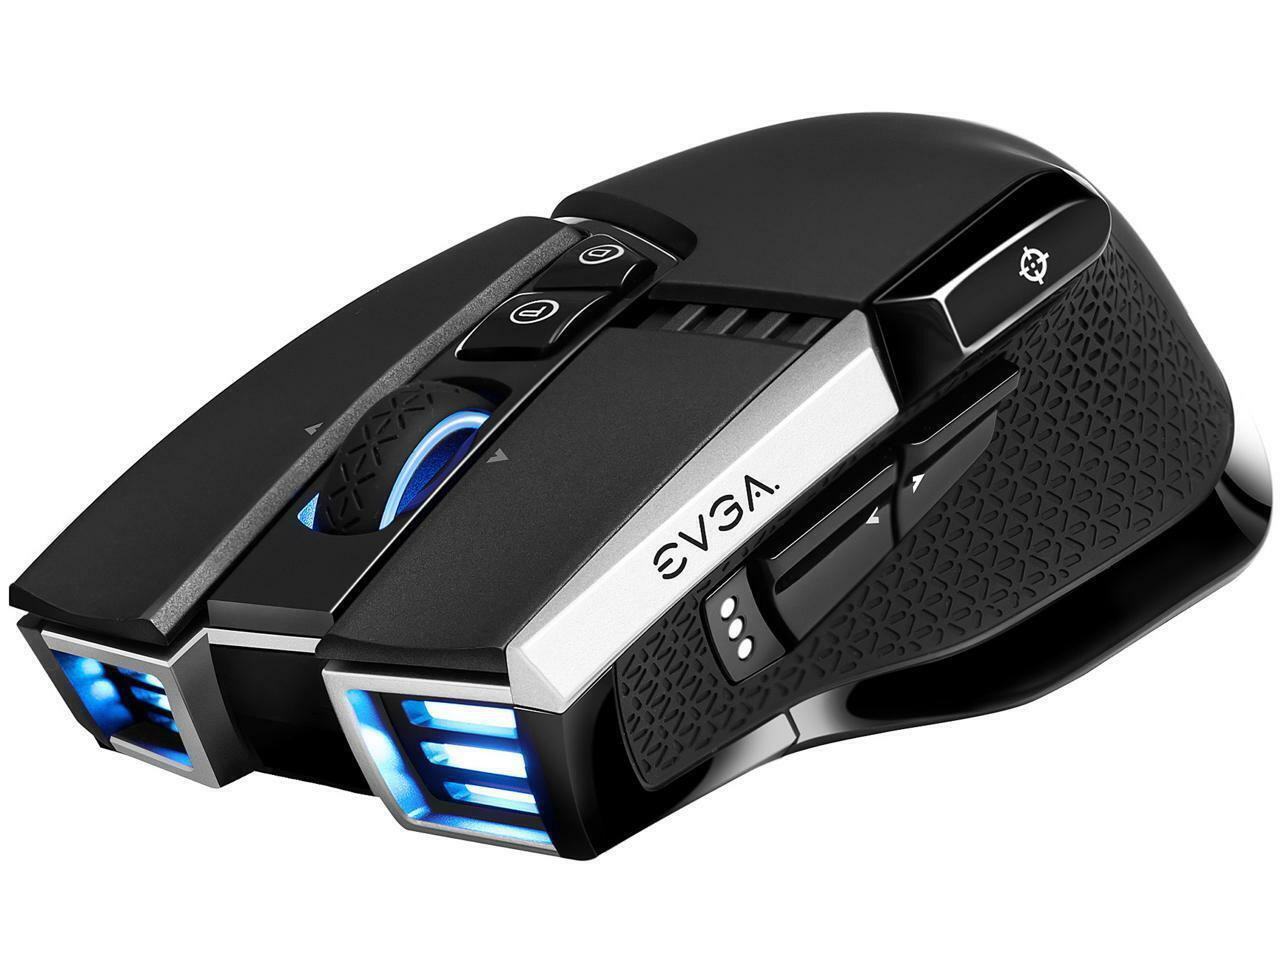 computadoras y laptops - EVGA X20 Gaming Mouse Wireless 6